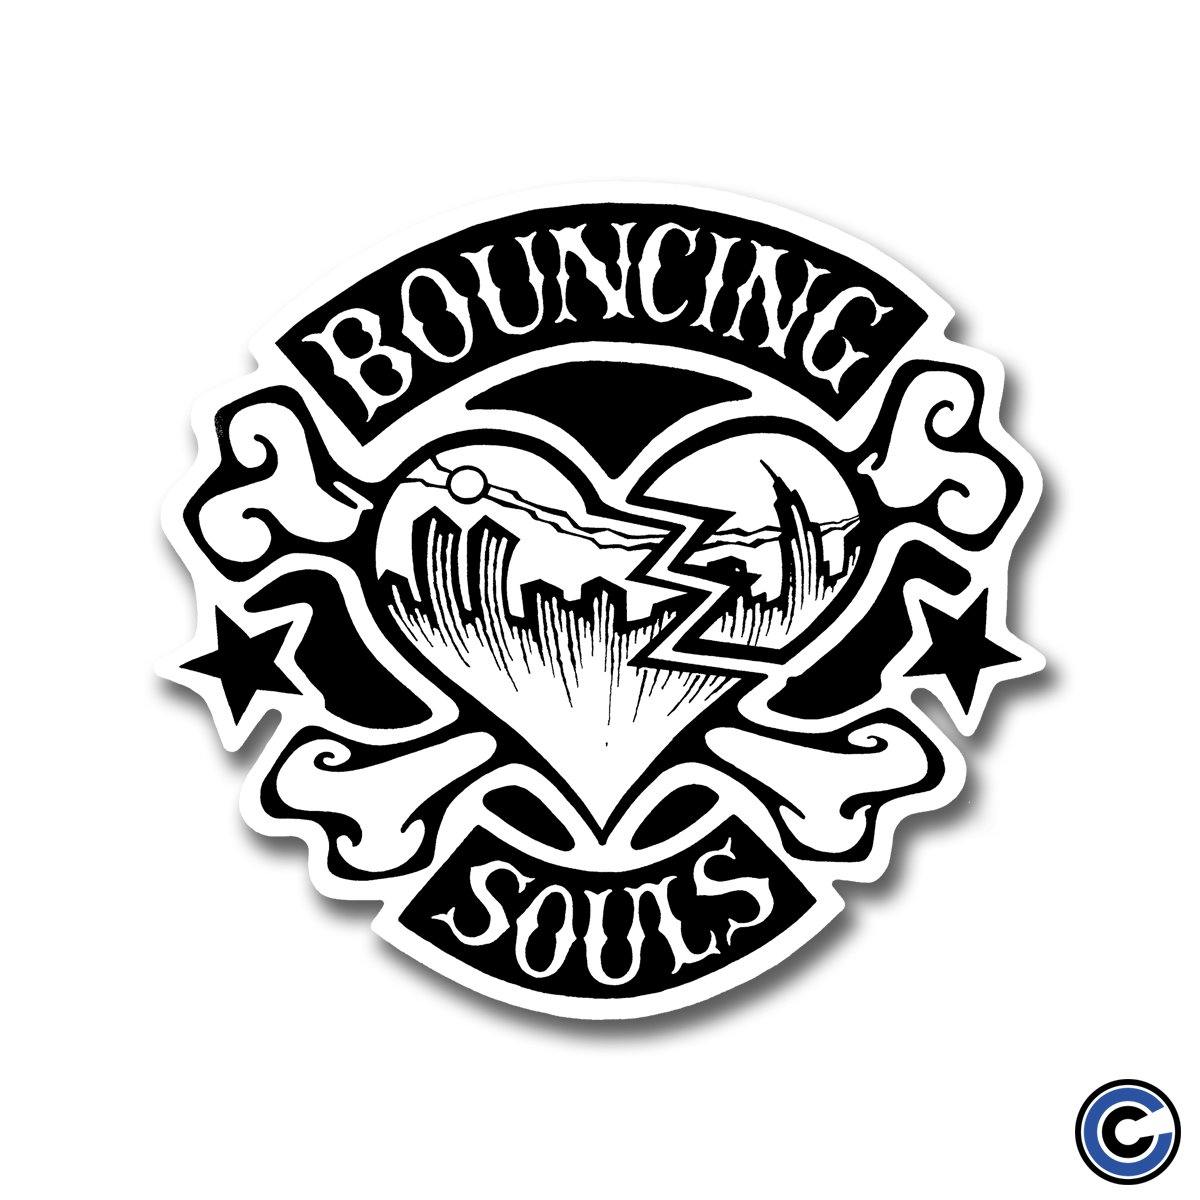 Buy – The Bouncing Souls "Rocker Heart BW" Sticker – Band & Music Merch – Cold Cuts Merch